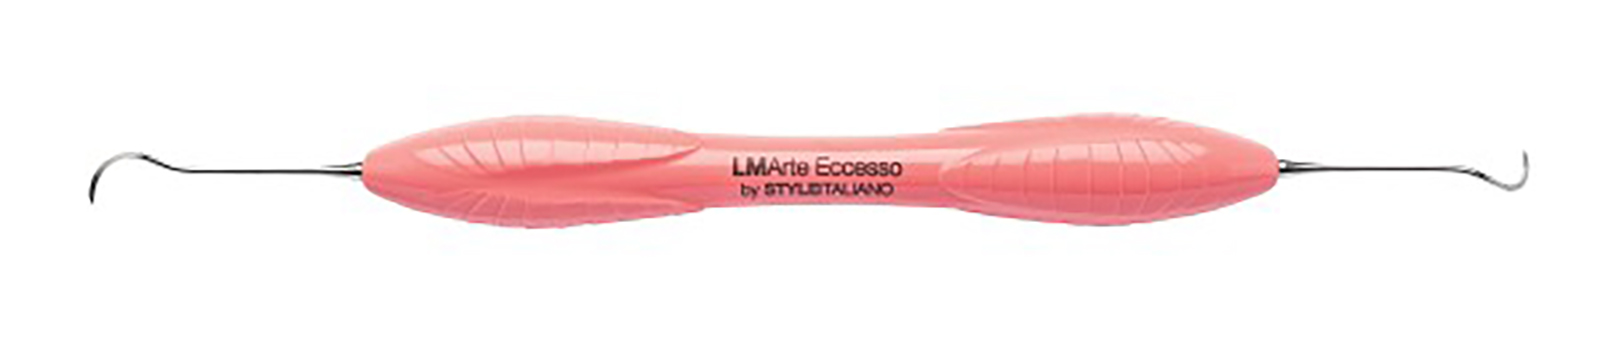 Arte Eccesso LM 307-308 ES-2.jpg